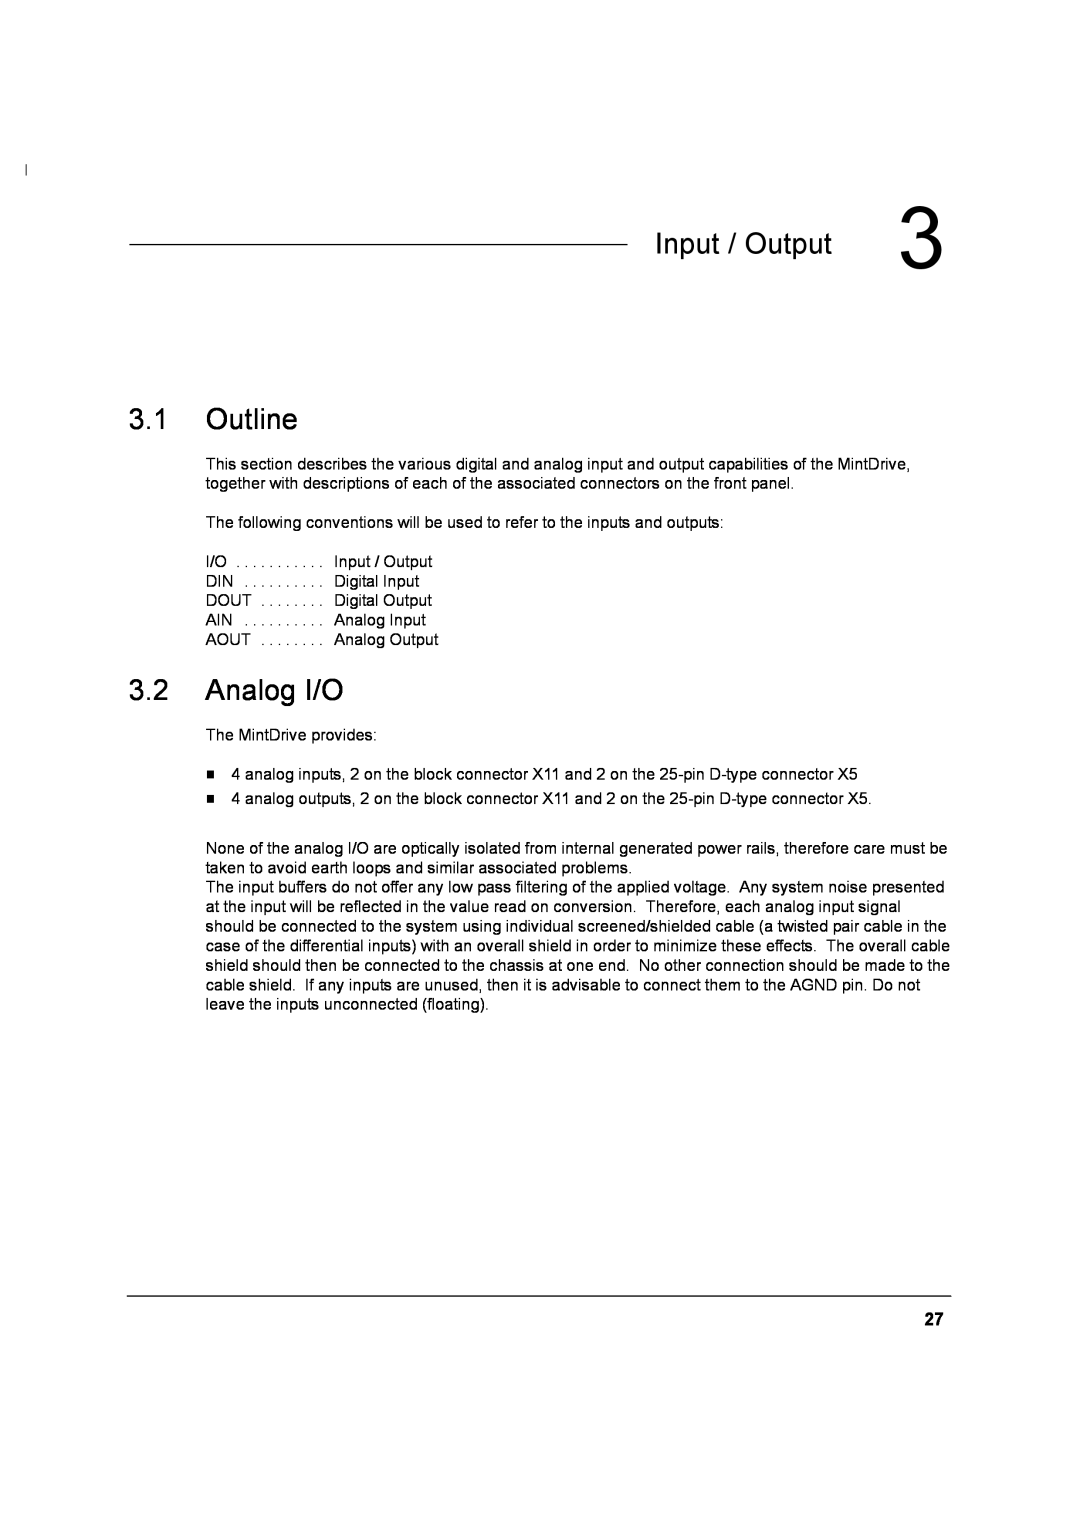 Baldor MN1274 06/2001 installation manual Input / Output, Outline, Analog I/O 